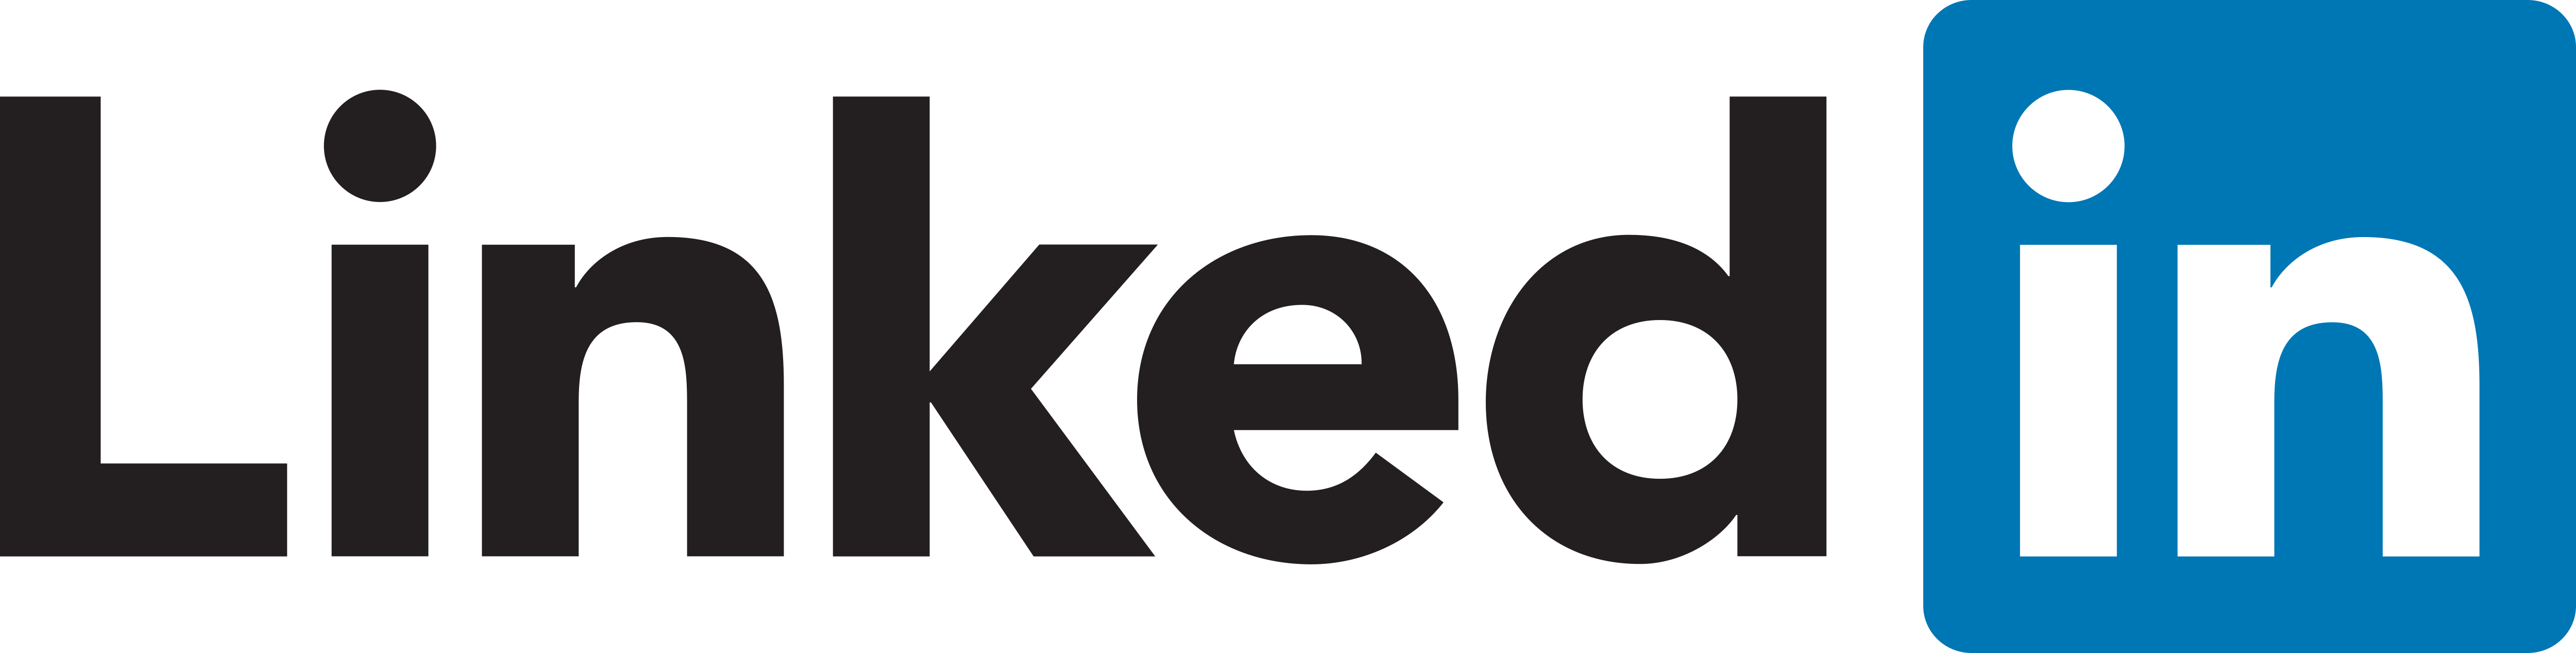 Linked In Logo PNG Transparent